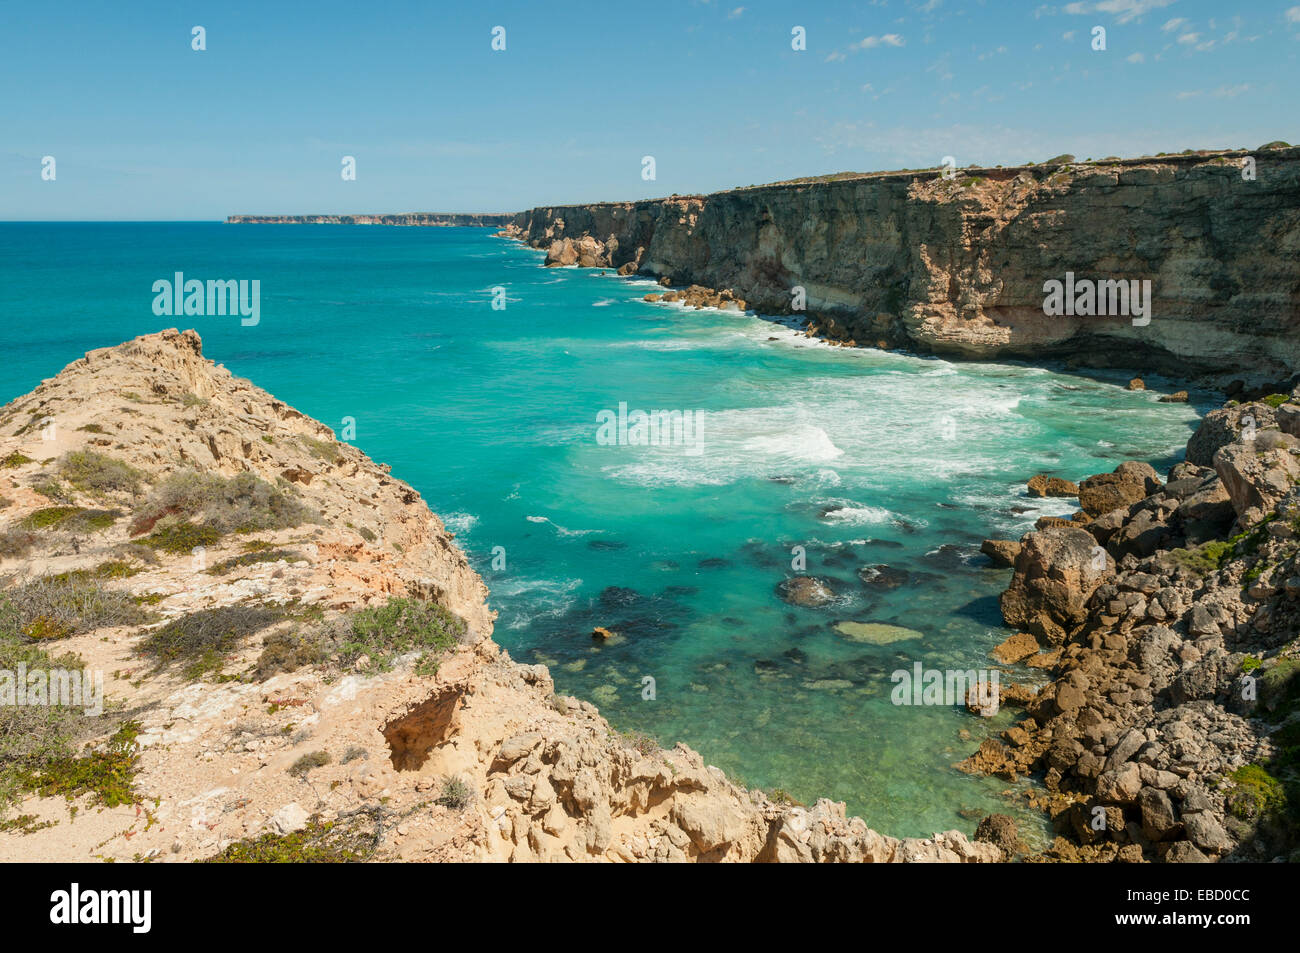 Cliffs at Head of Bight, SA, Australia Stock Photo